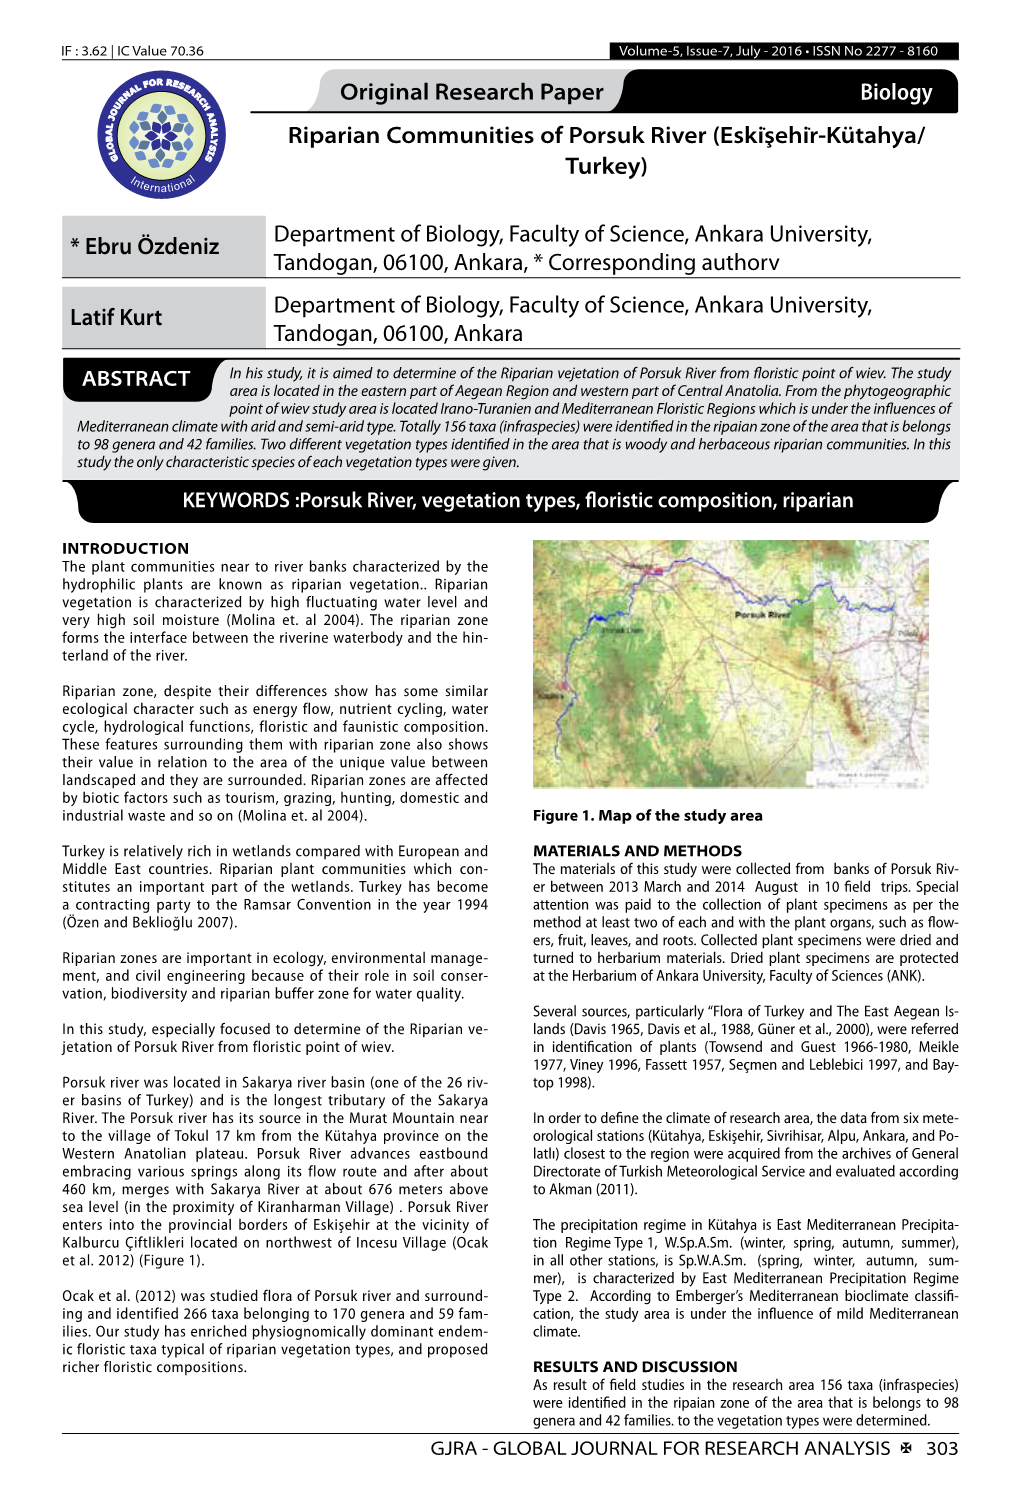 Original Research Paper Biology Riparian Communities of Porsuk River (Eski̇şehi̇r-Kütahya/ Turkey)